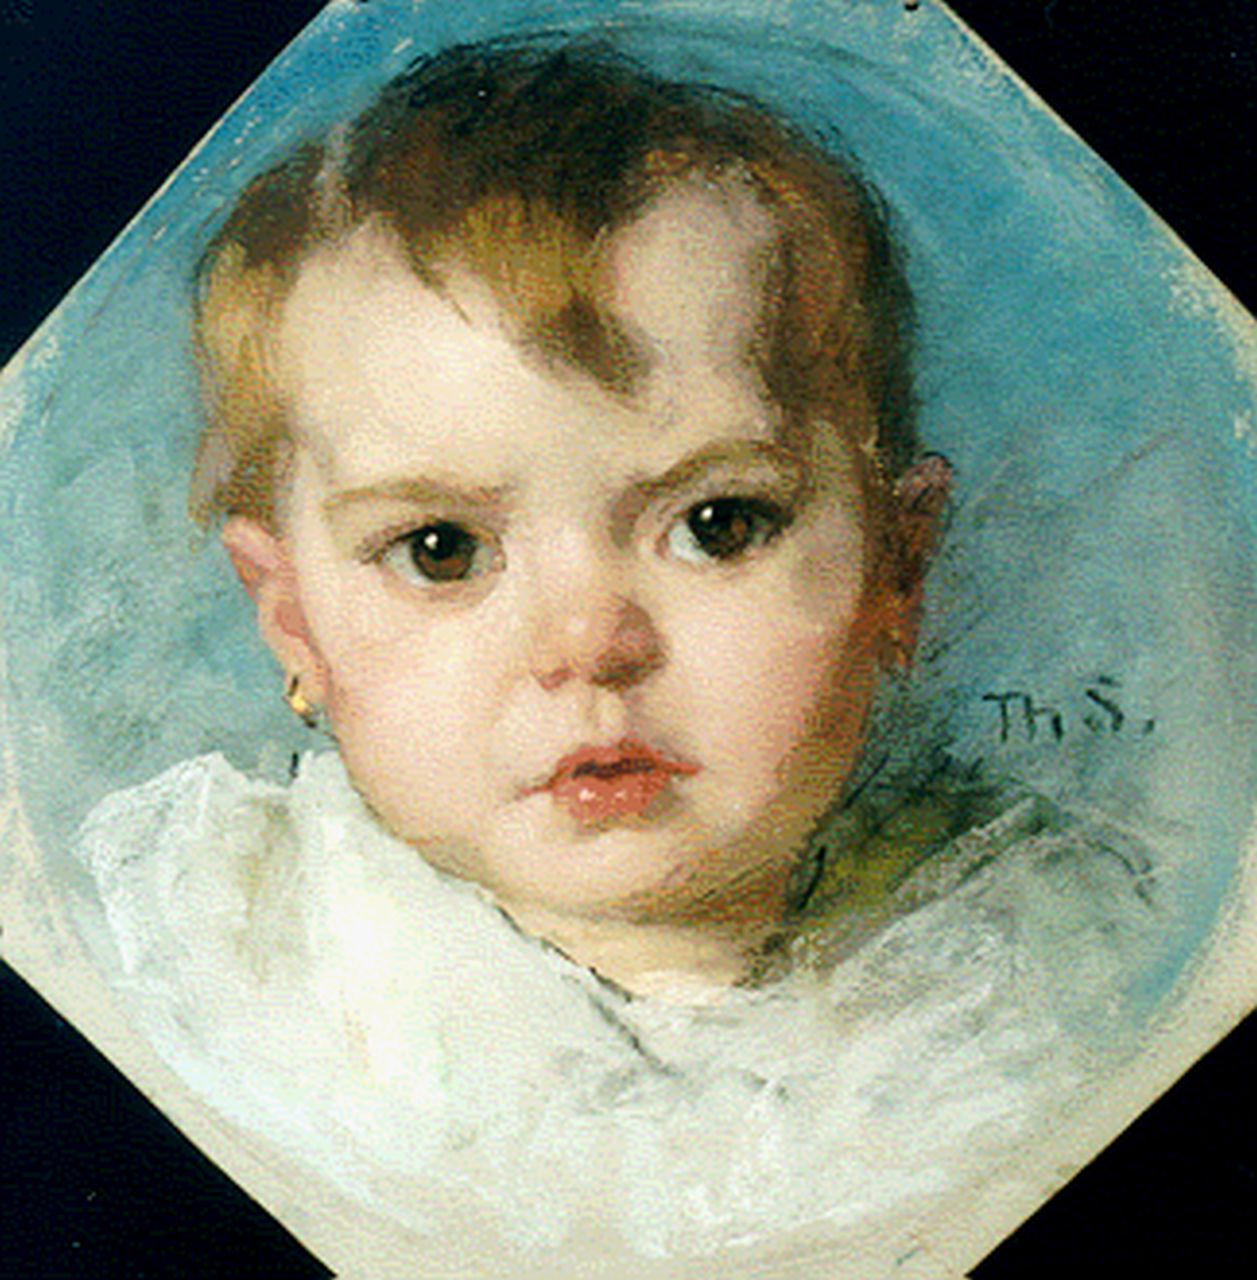 Schwartze T.  | Thérèse Schwartze, A portrait of a child, Pastell auf Papier 25,4 x 25,4 cm, signed m.r. with initials